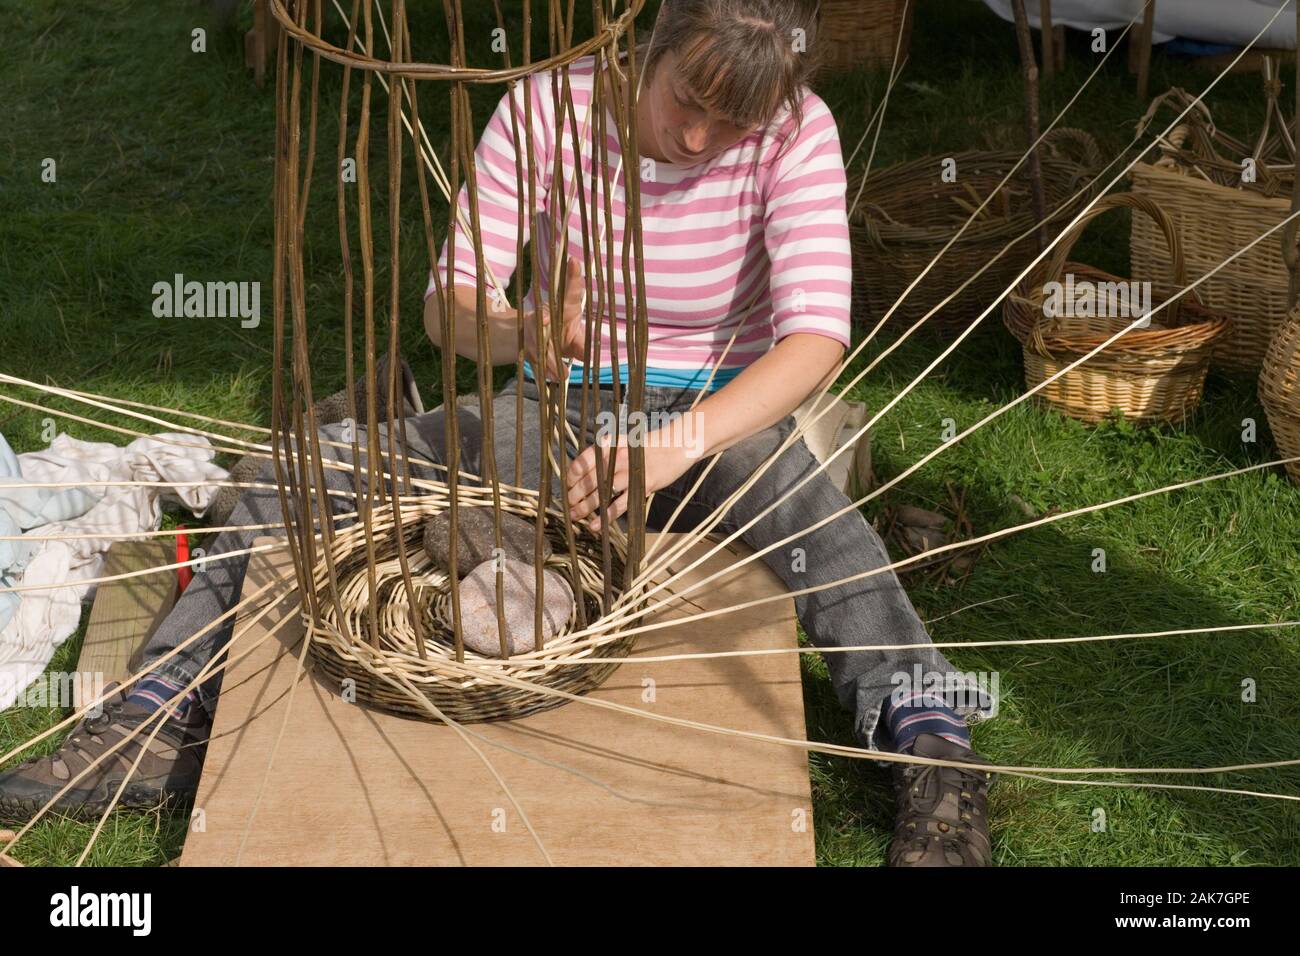 WEAVING with willow (Salix viminalis) OSIER WITHIES. Basket making. Stock Photo